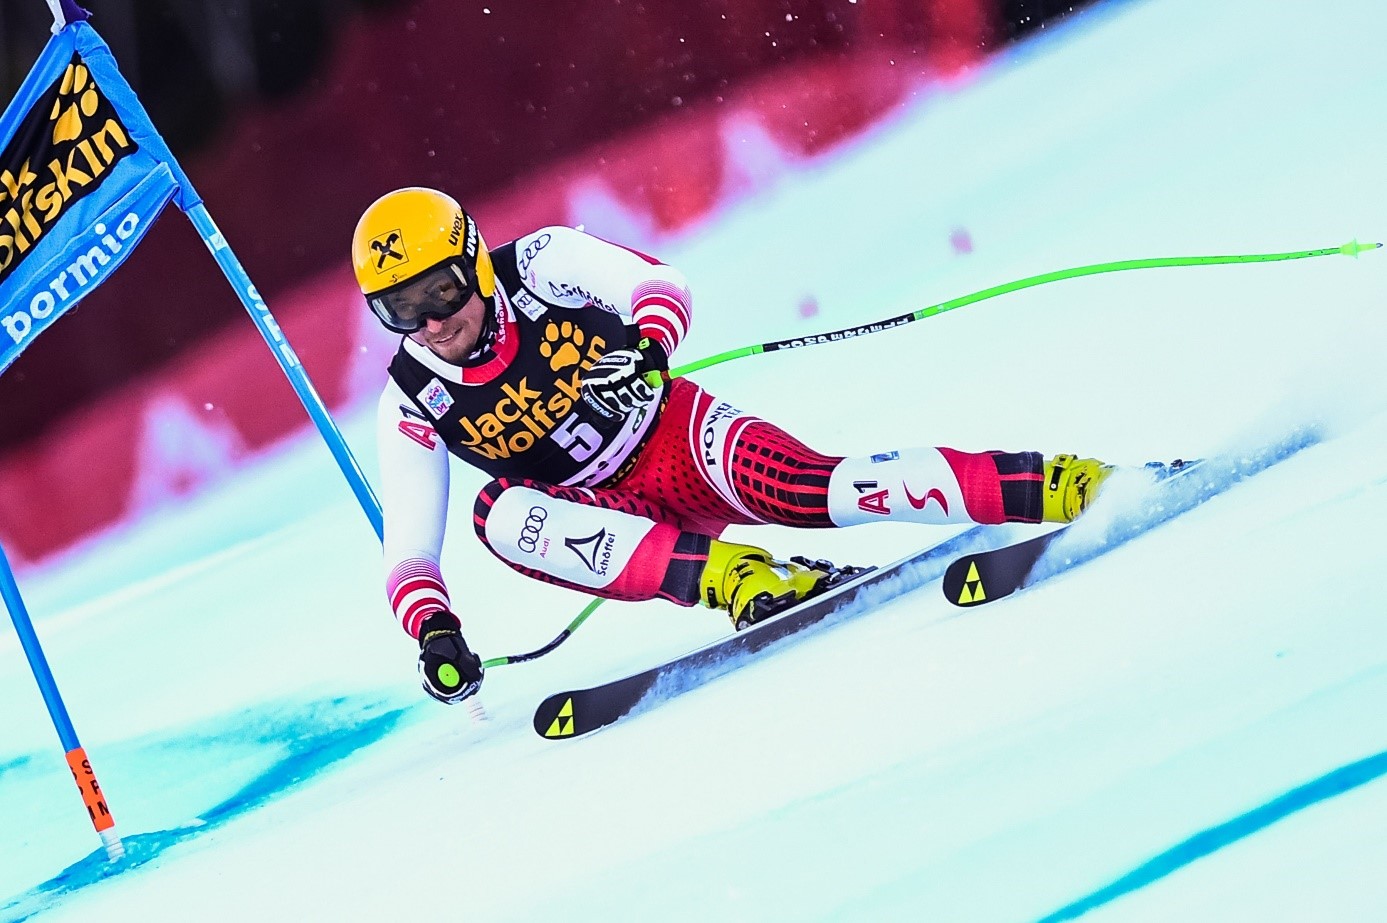 OBS: Milano Cortina Winter Games will 'redefine broadcasting' – TVBEurope